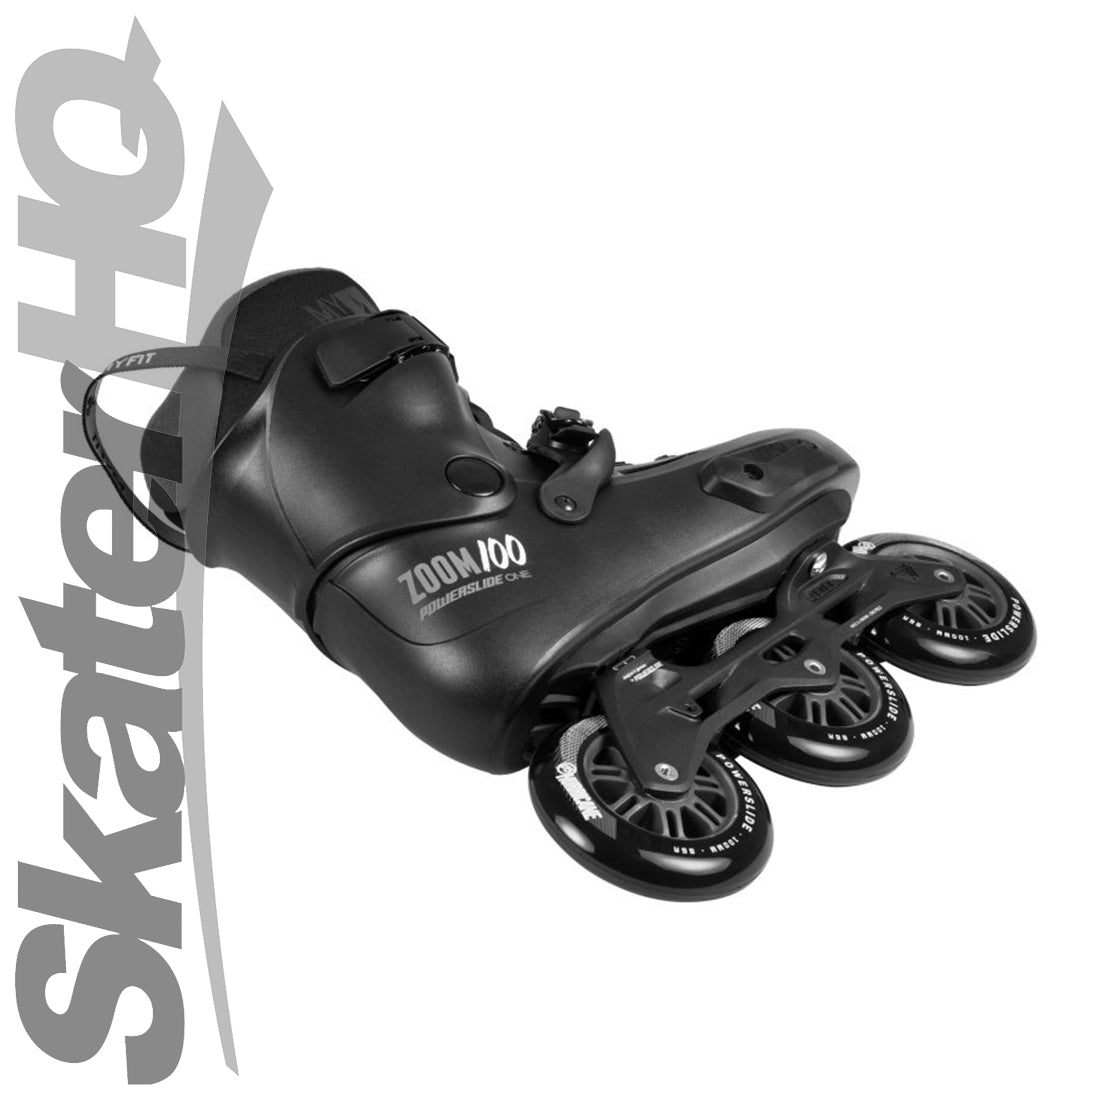 Powerslide Zoom Pro 100 EU39-40 7-7.5US Inline Rec Skates